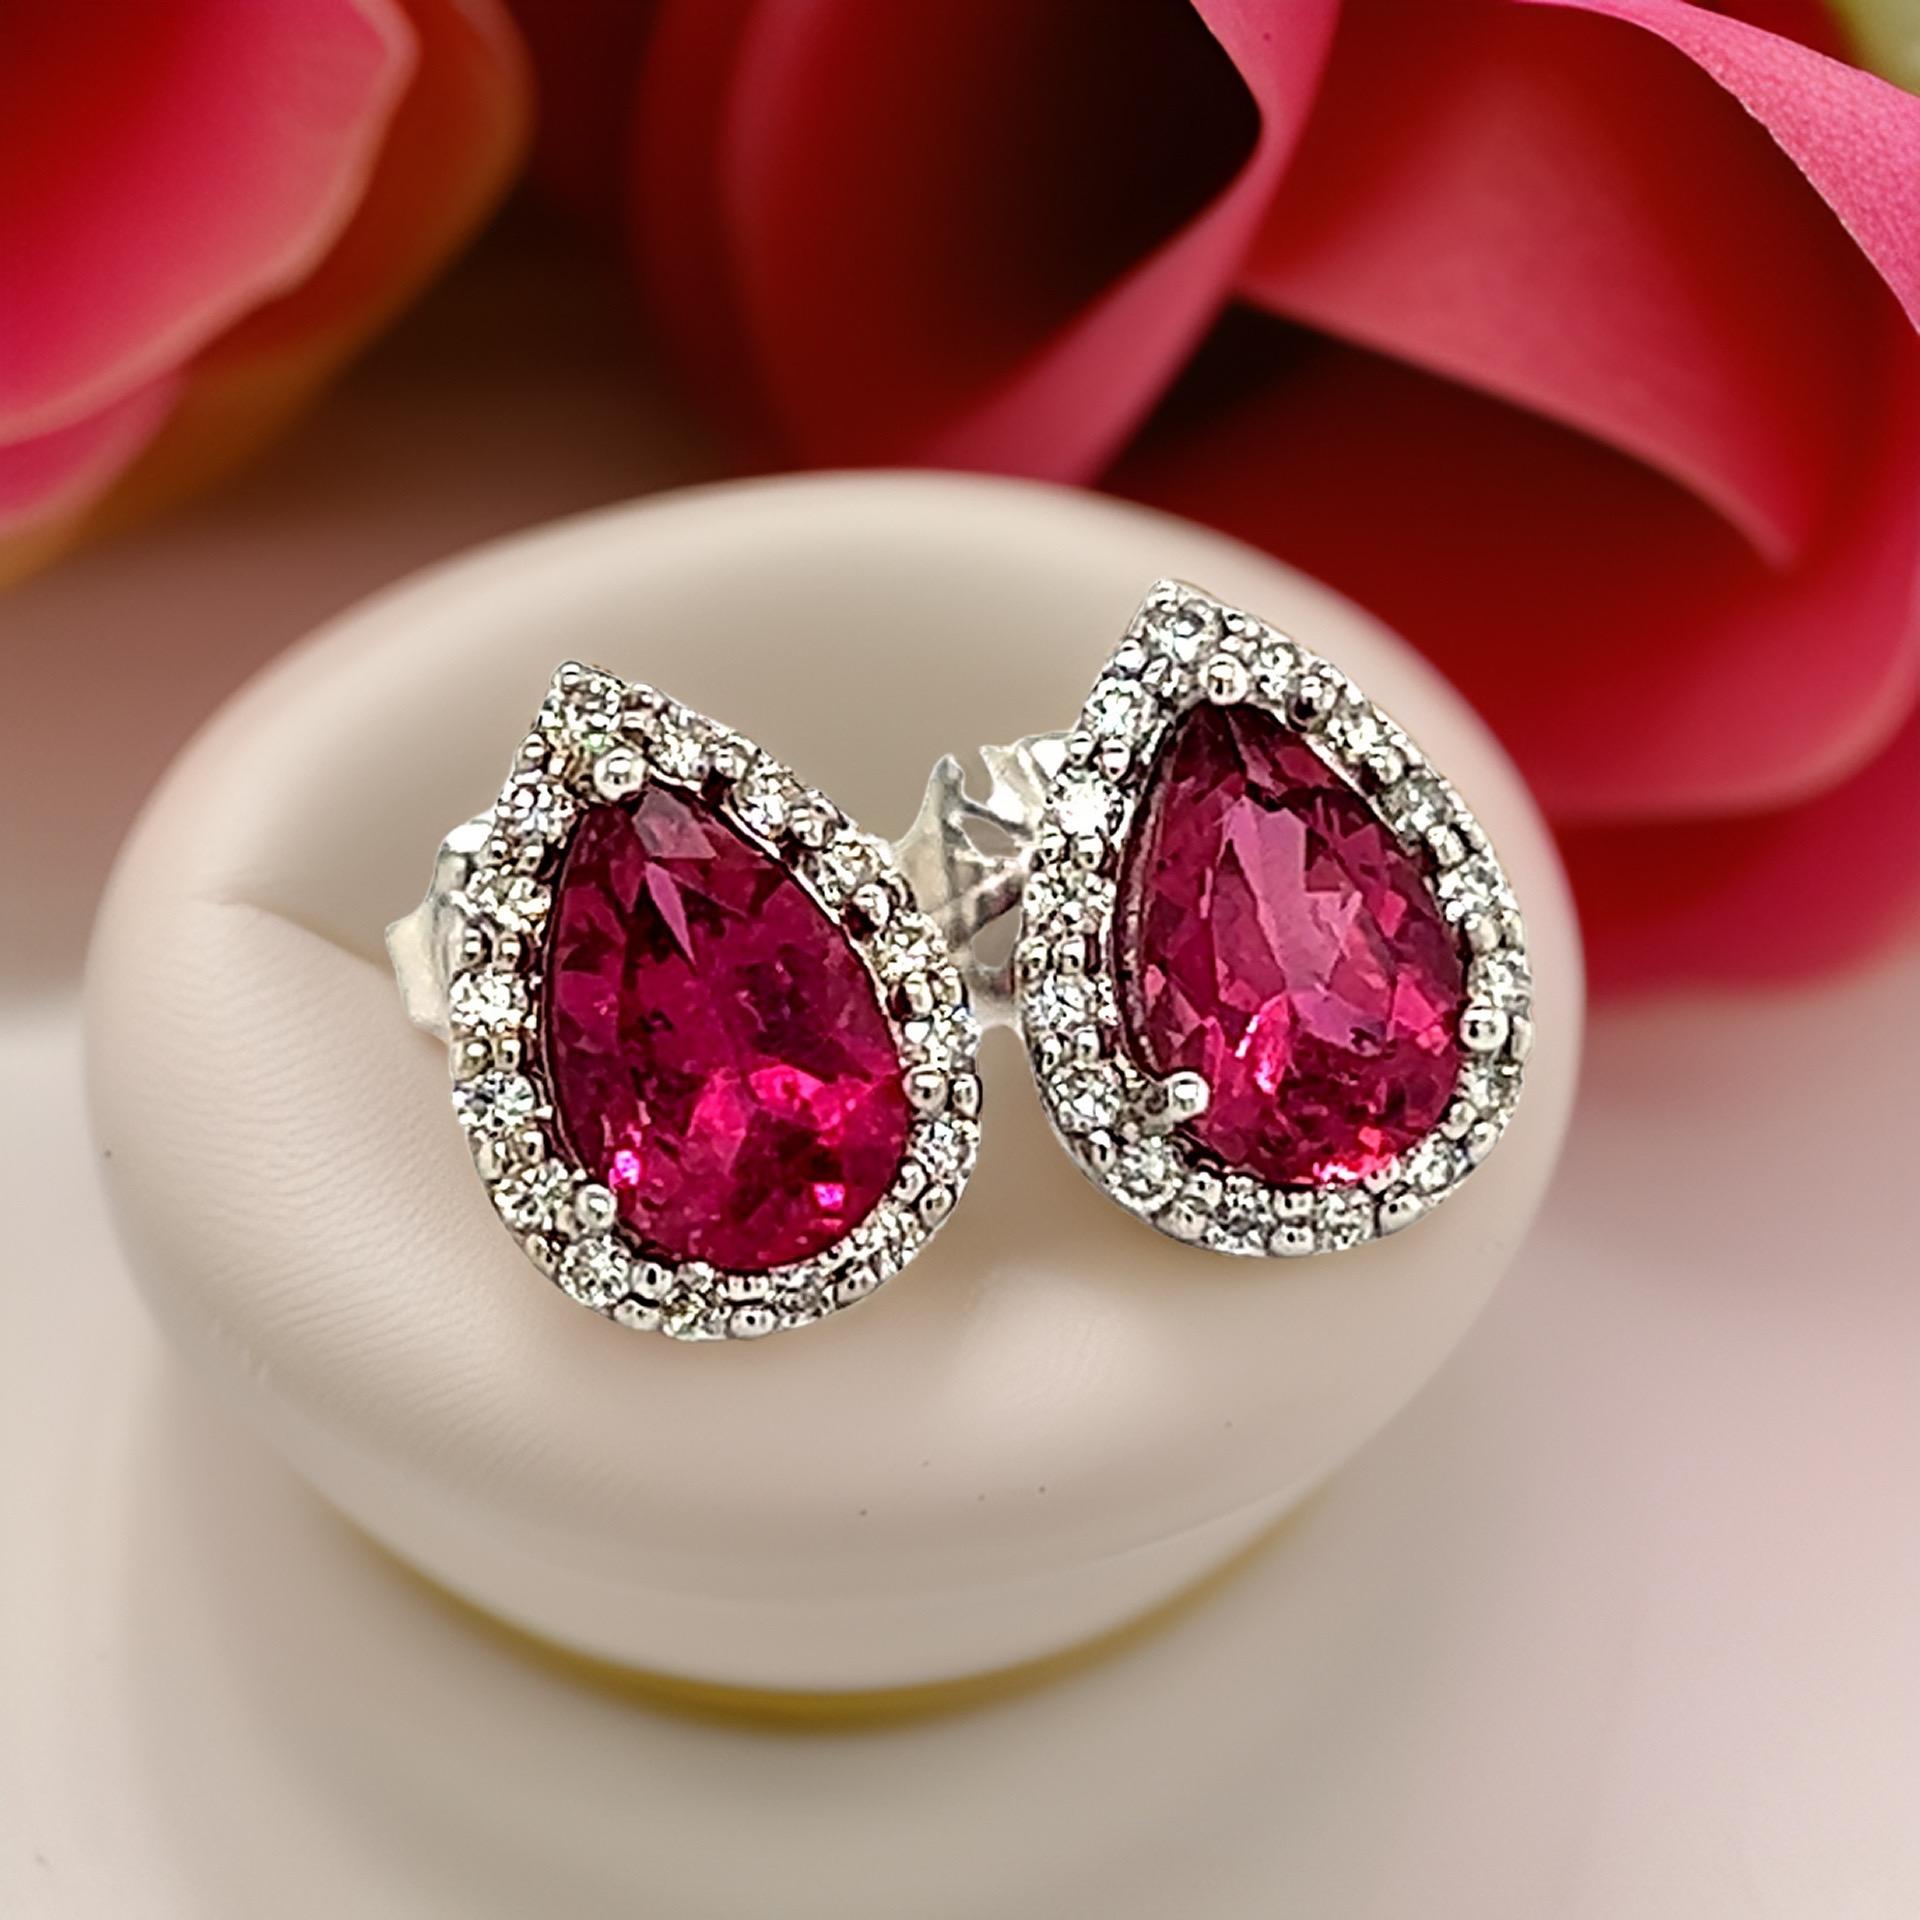 Pear Cut Natural Pink Tourmaline Diamond Stud Earrings 14k W Gold 2.02 TCW Certified For Sale